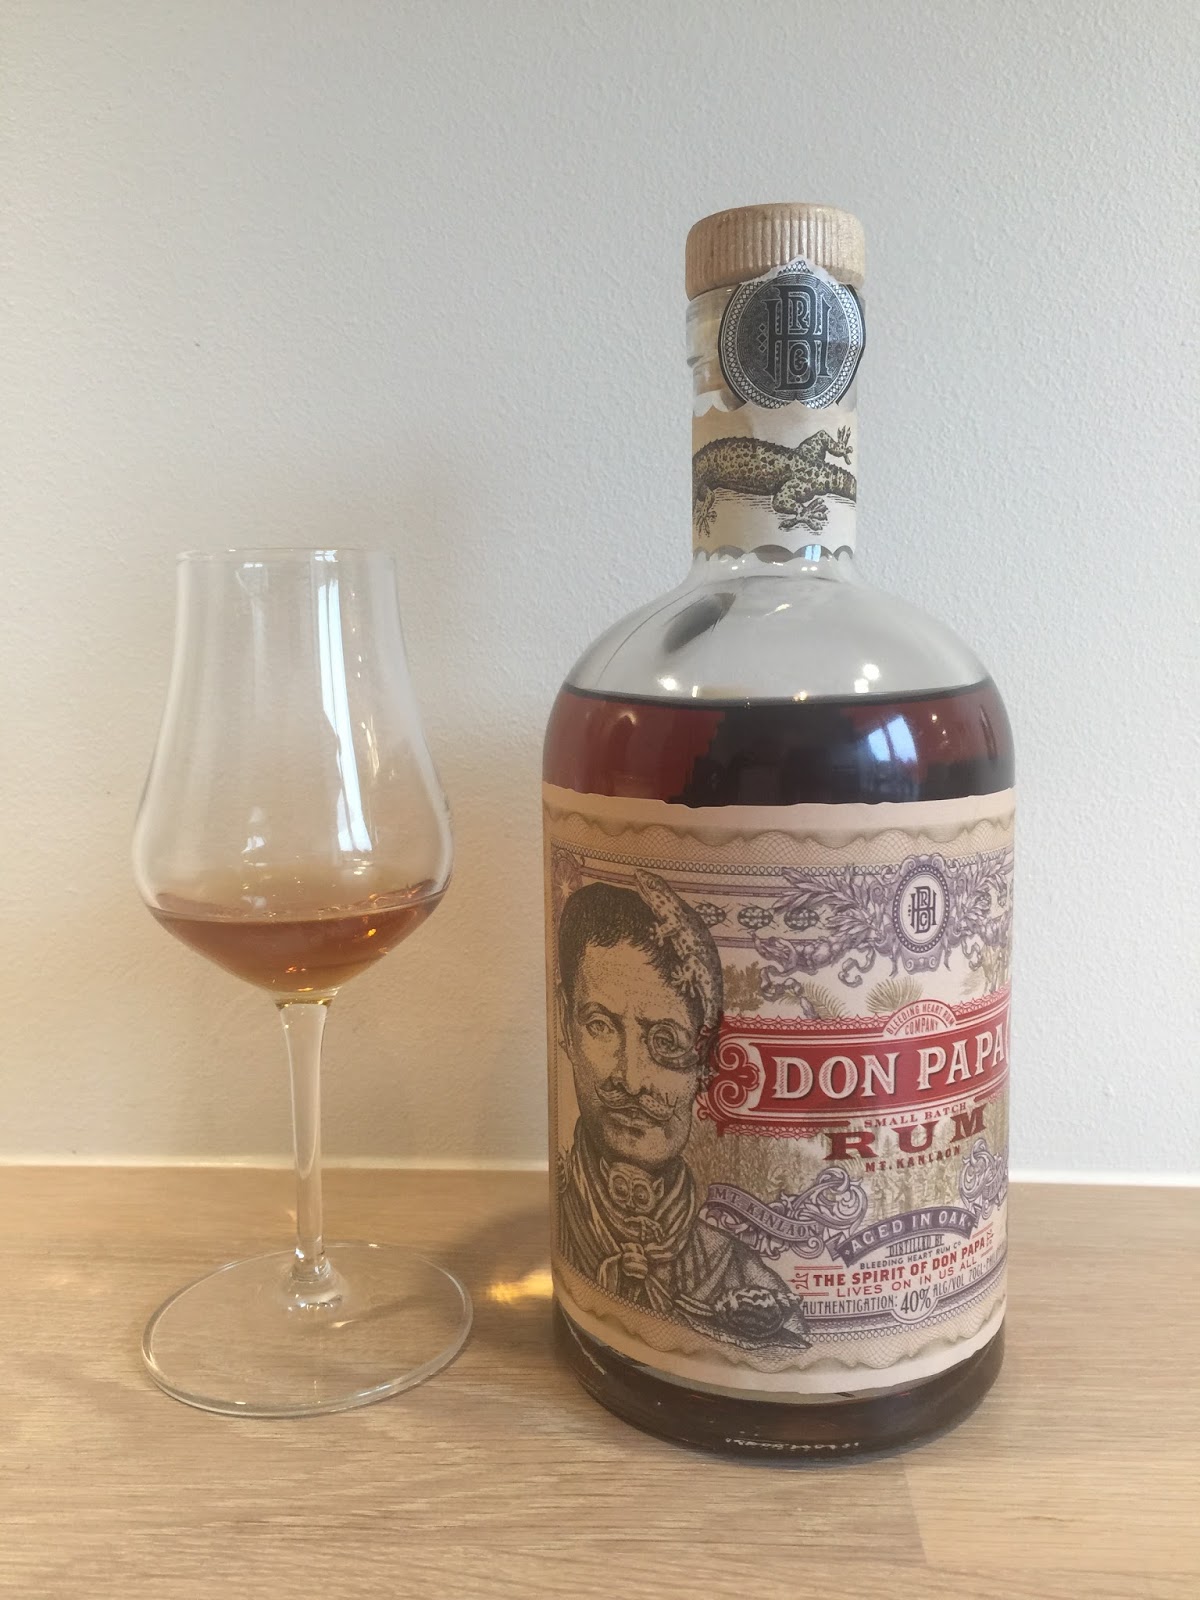 Don Papa No.7 Small Batch Rum 